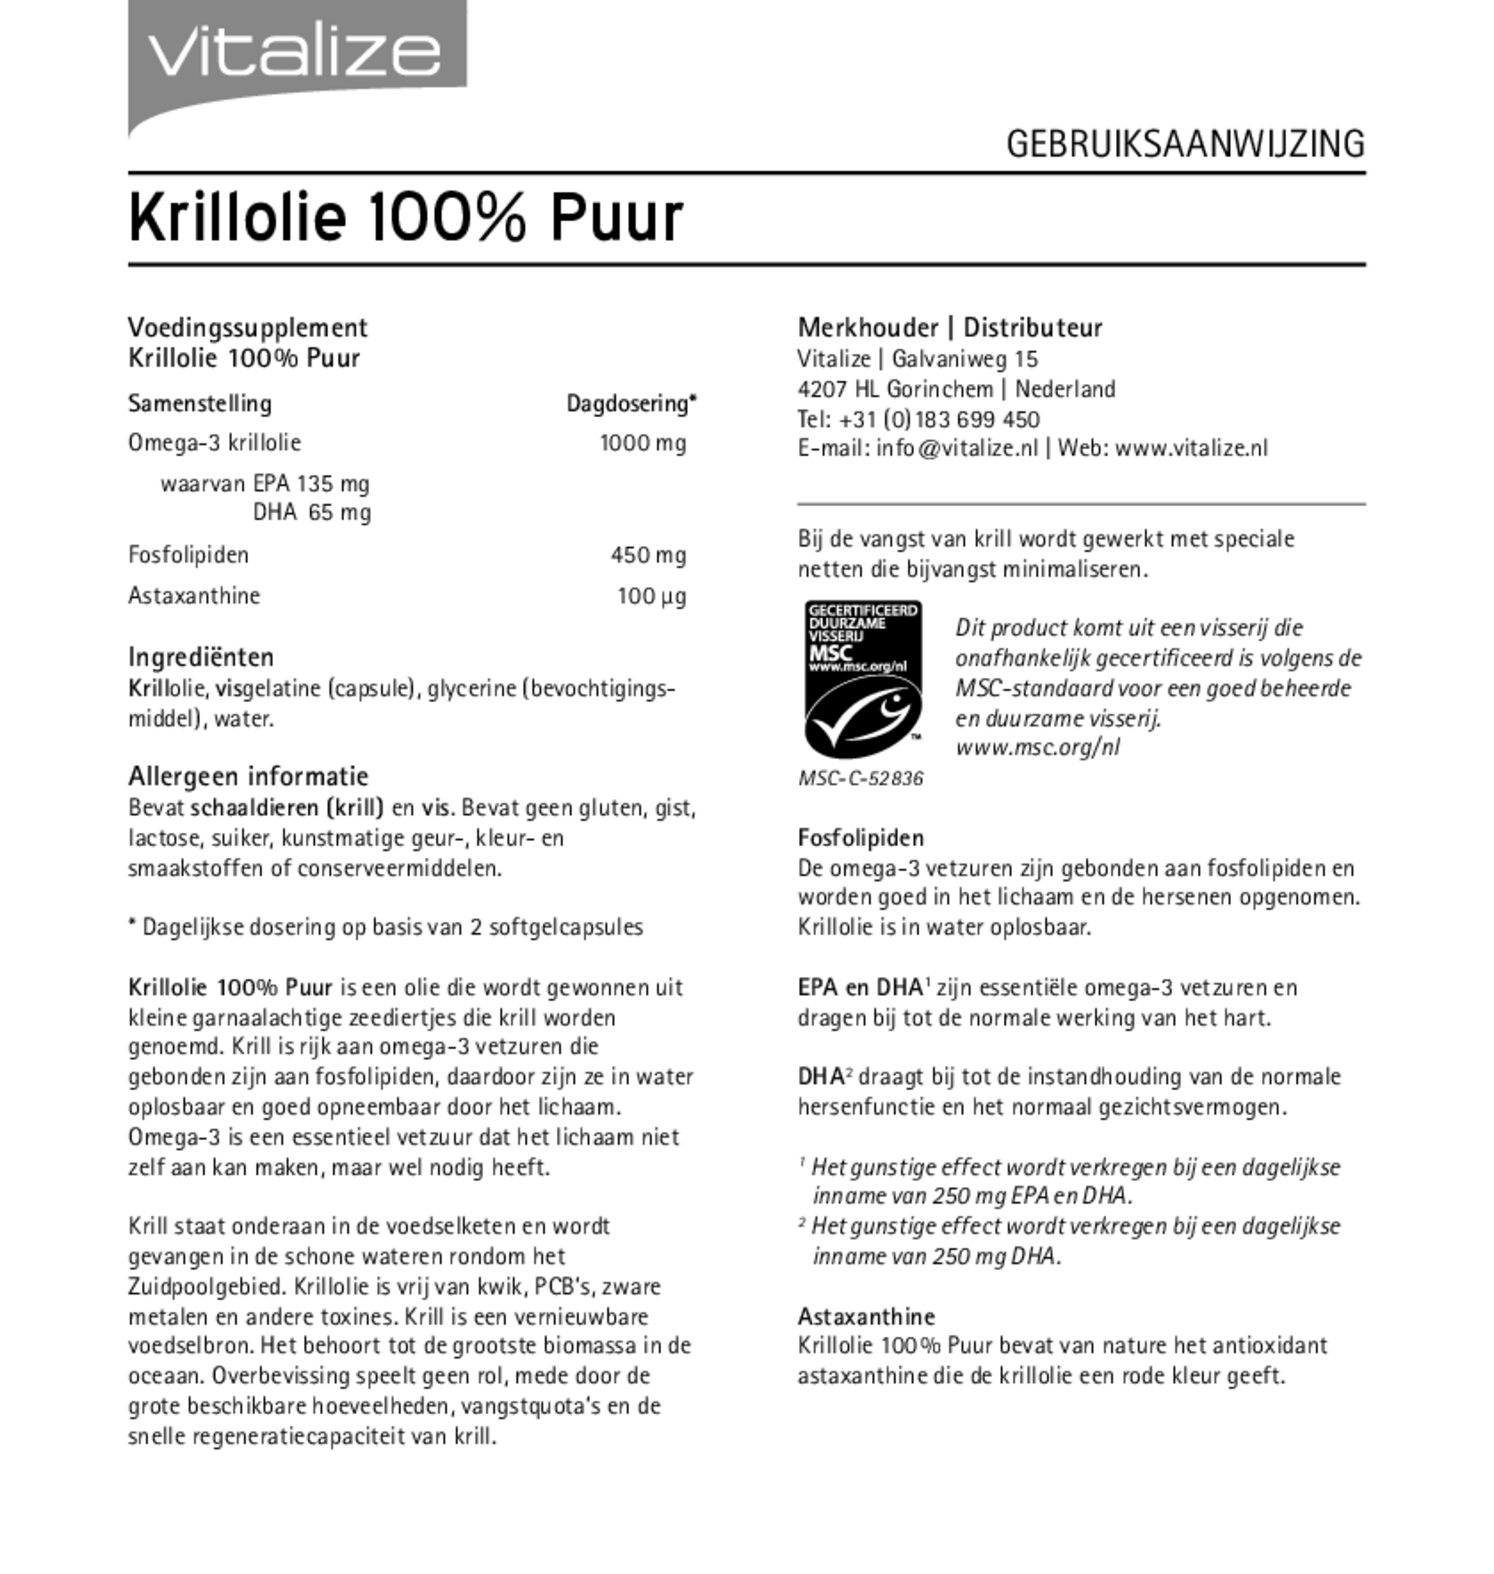 Krillolie 100% Puur Capsules afbeelding van document #1, gebruiksaanwijzing